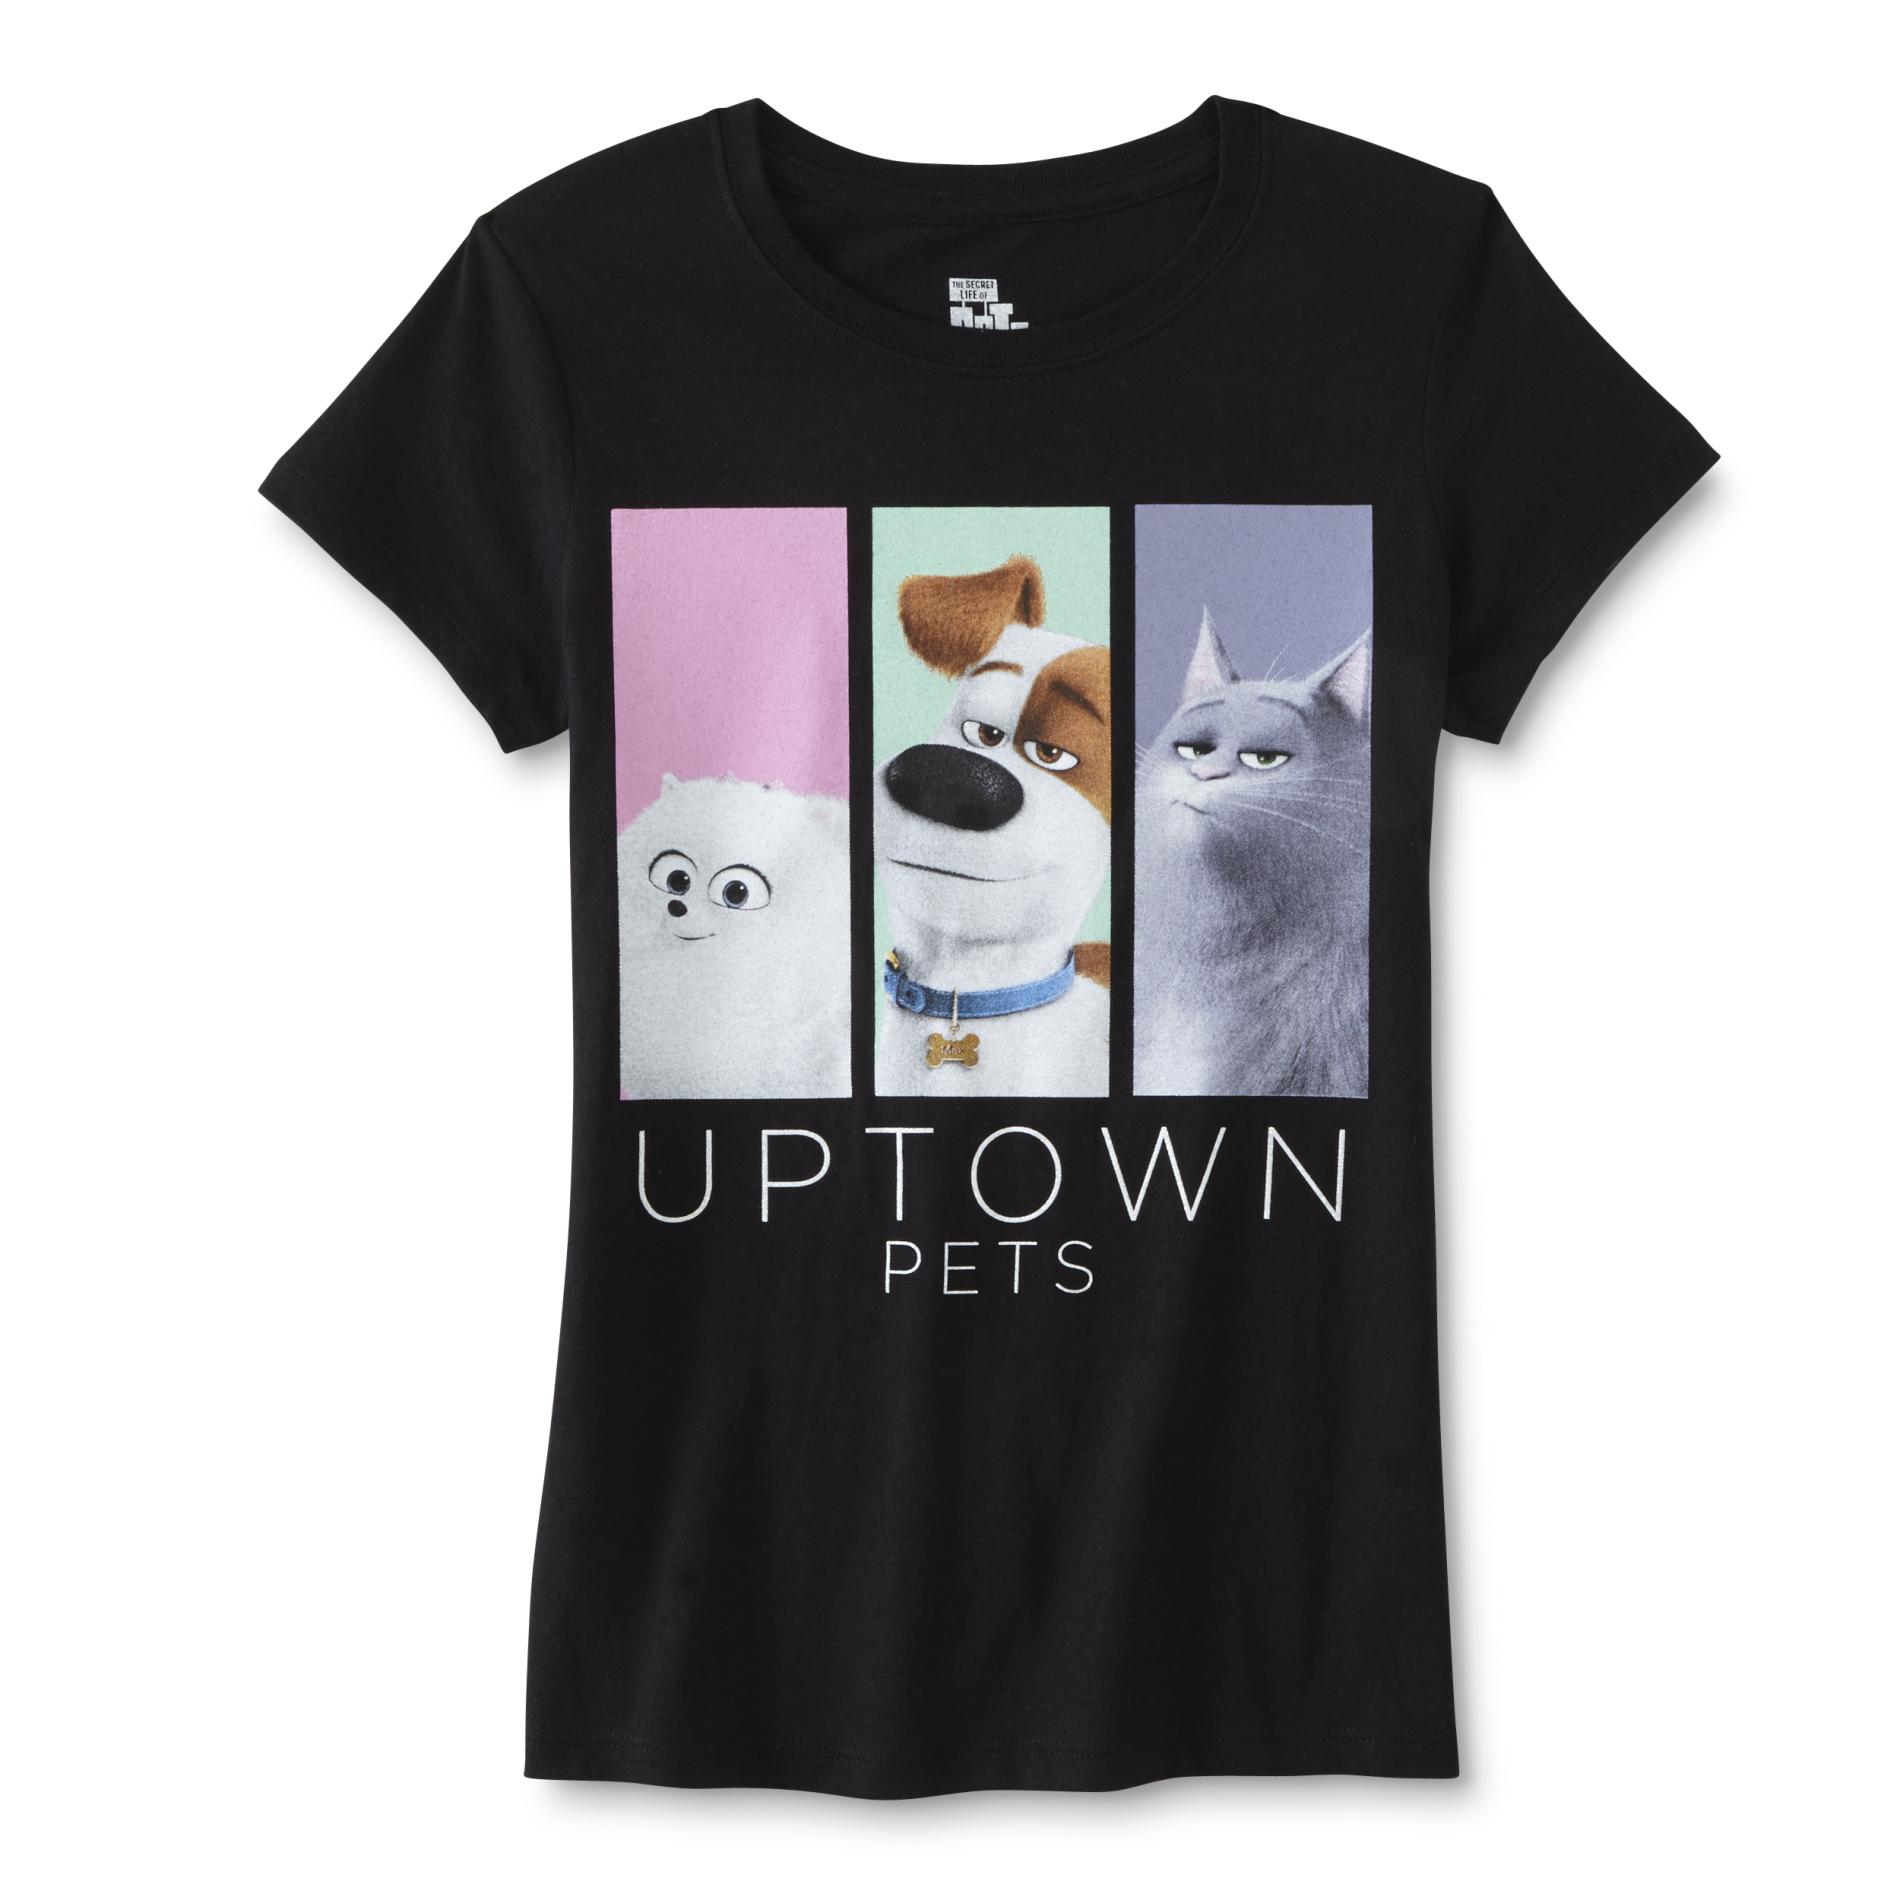 Illumination Entertainment The Secret Life of Pets Girls' Graphic T-Shirt - Uptown Pets